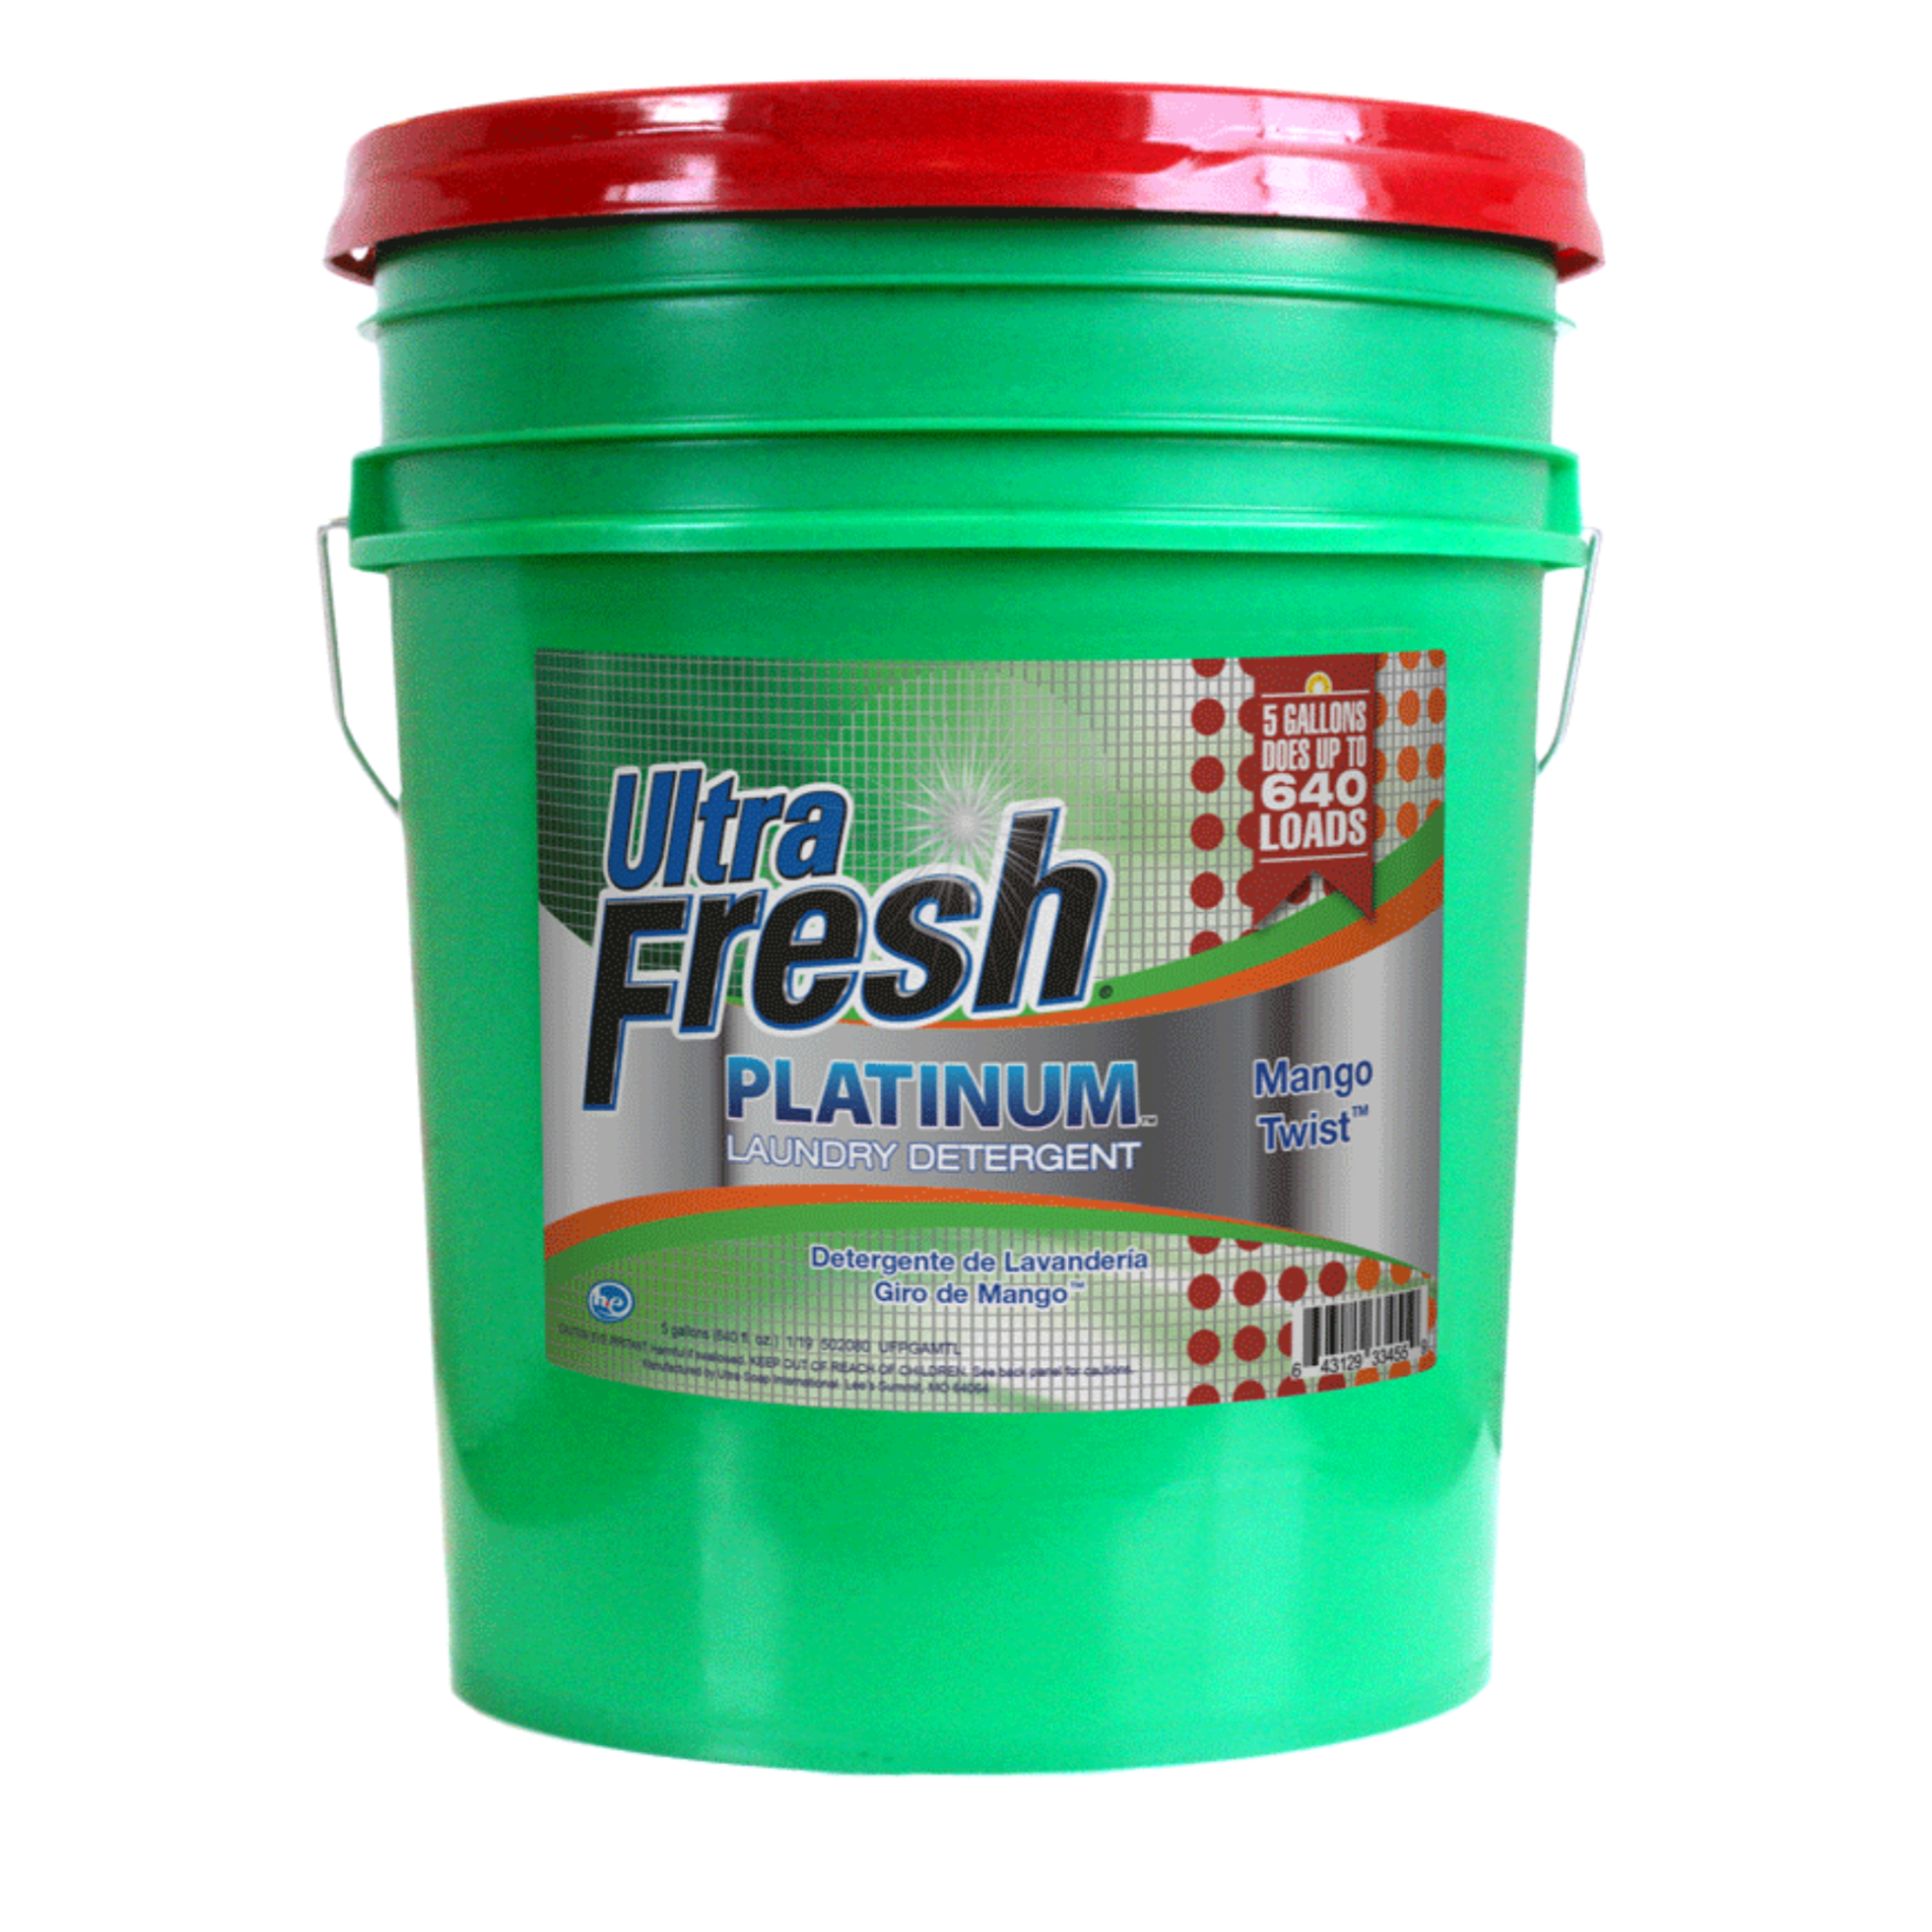 Ultra Fresh Platinum Mango Twist 3X Laundry Detergent - 5 Gallons